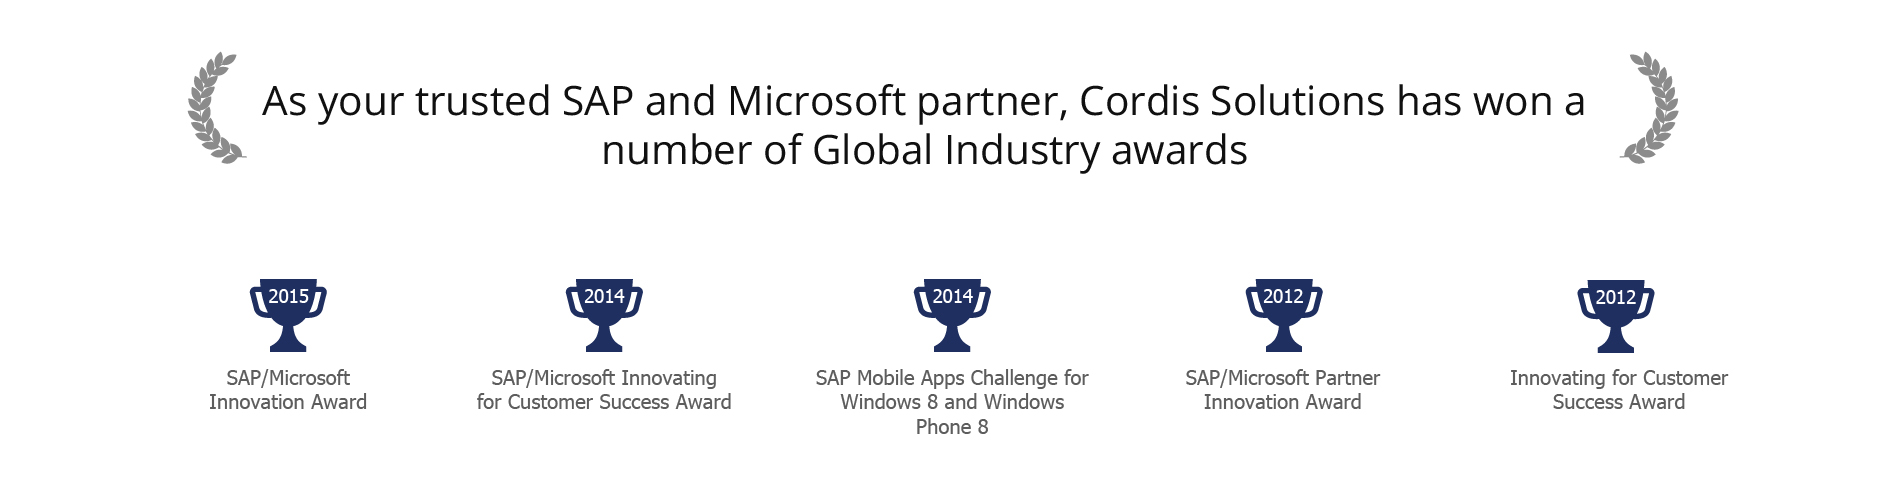 Cordis Solutions Awards